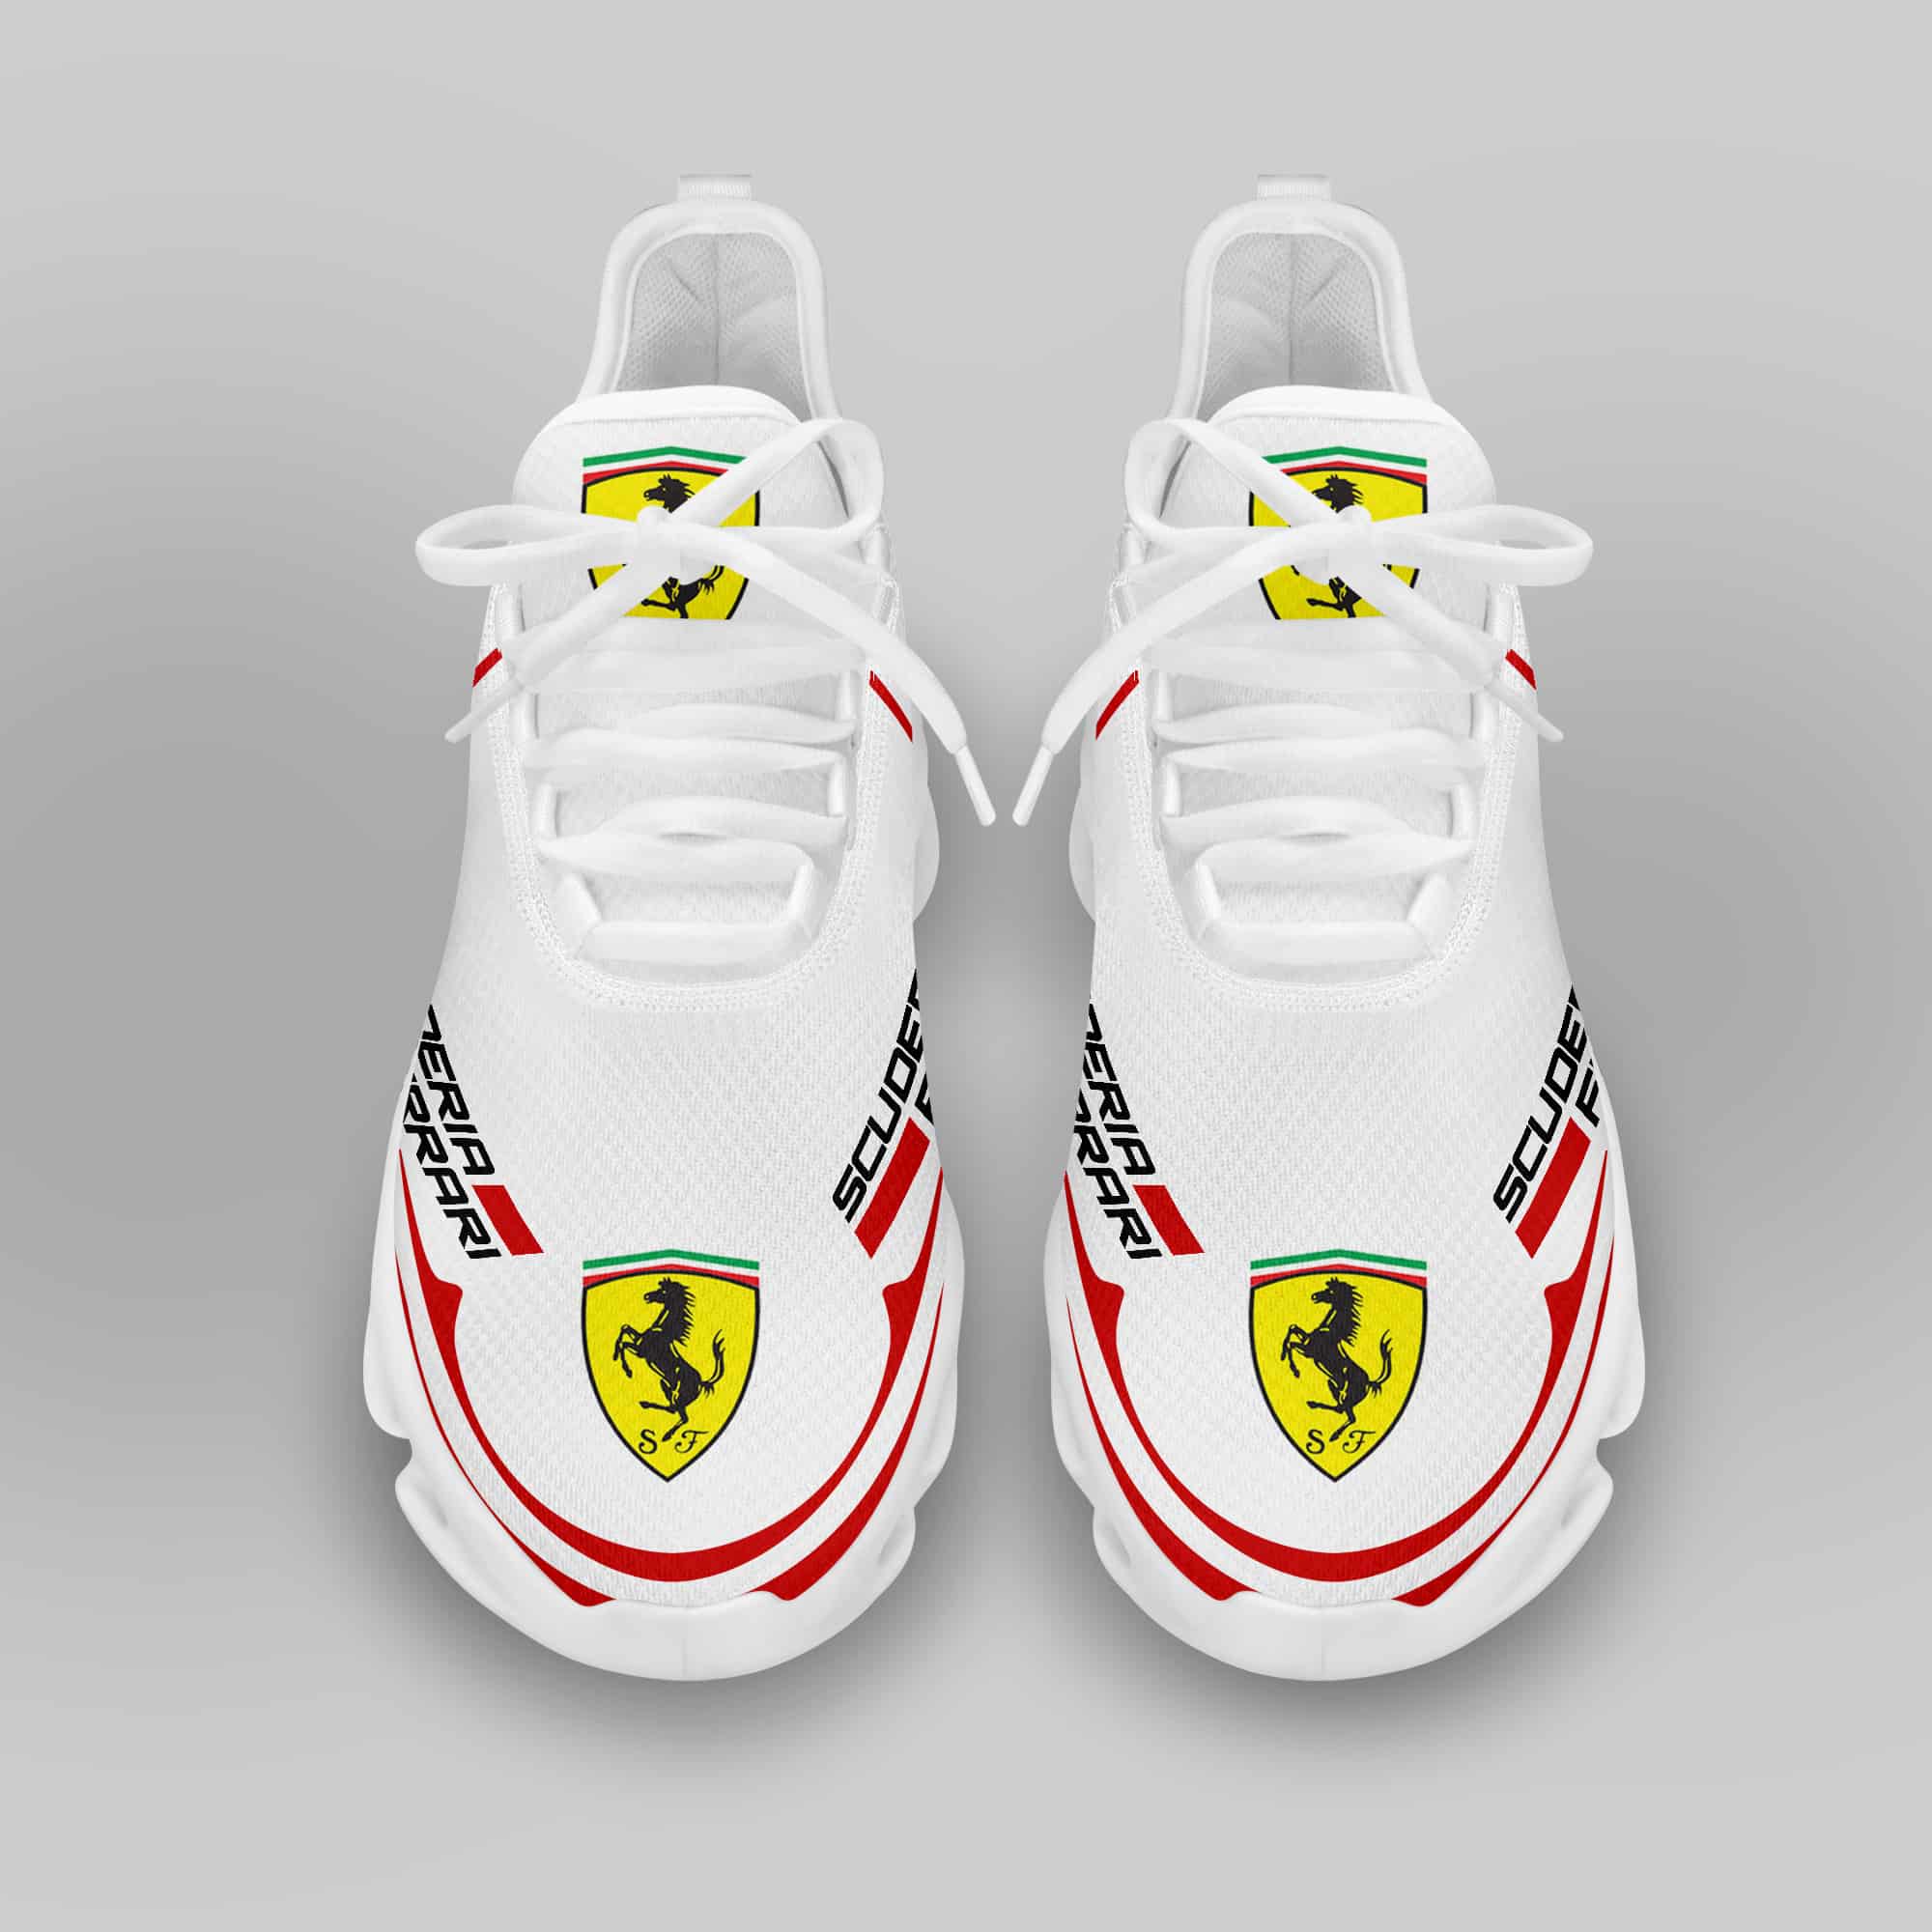 Ferrari Sneaker Running Shoes Max Soul Shoes Sneakers Ver 25 3